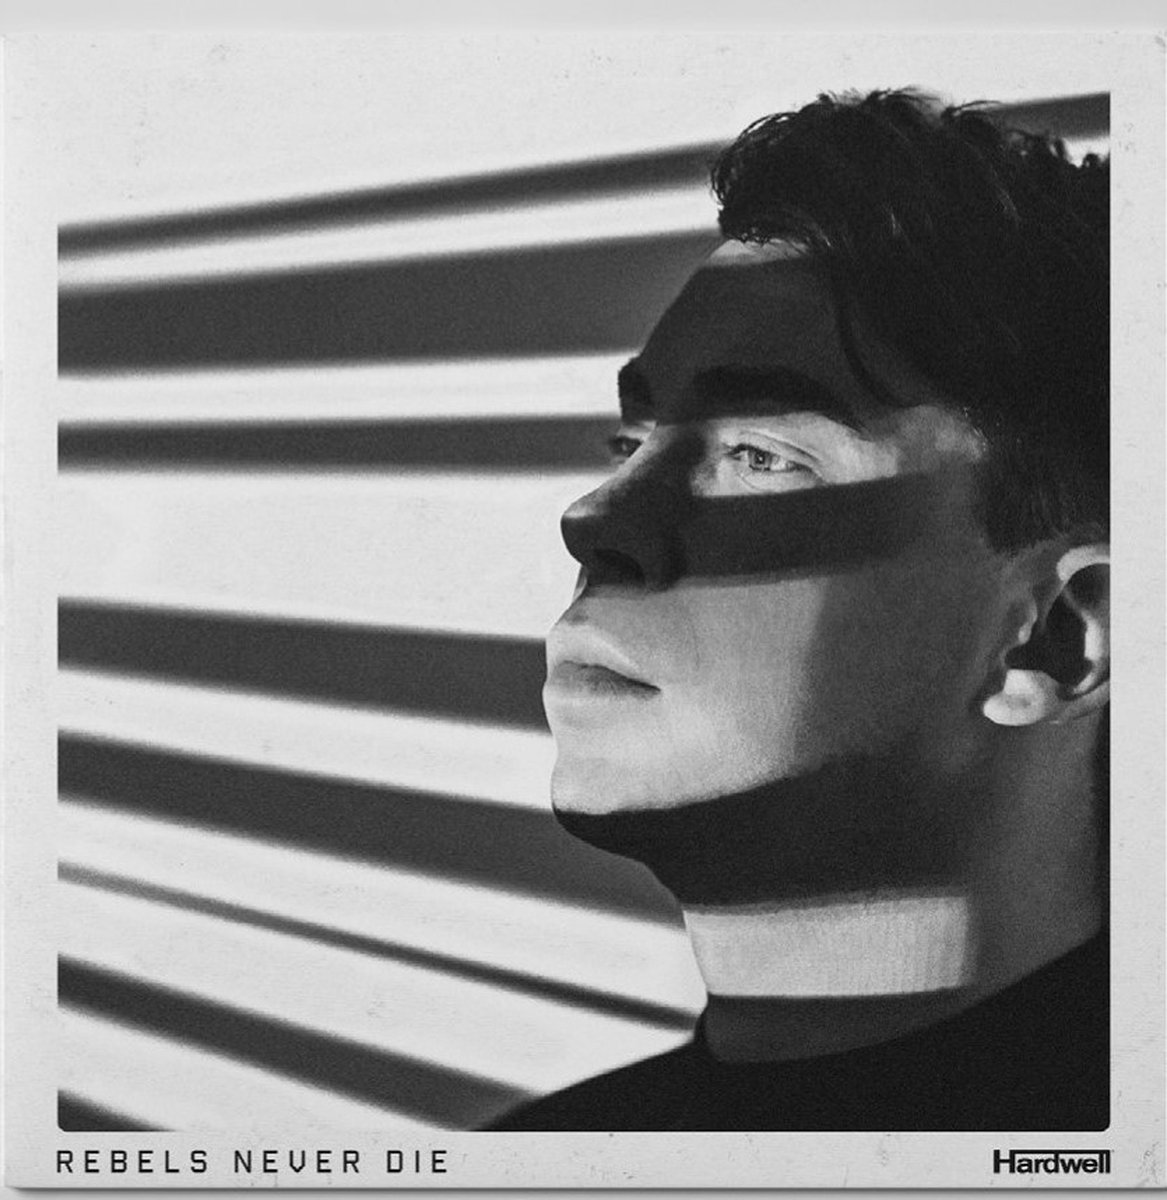 Hardwell - Rebels Never Die (CD) - Hardwell